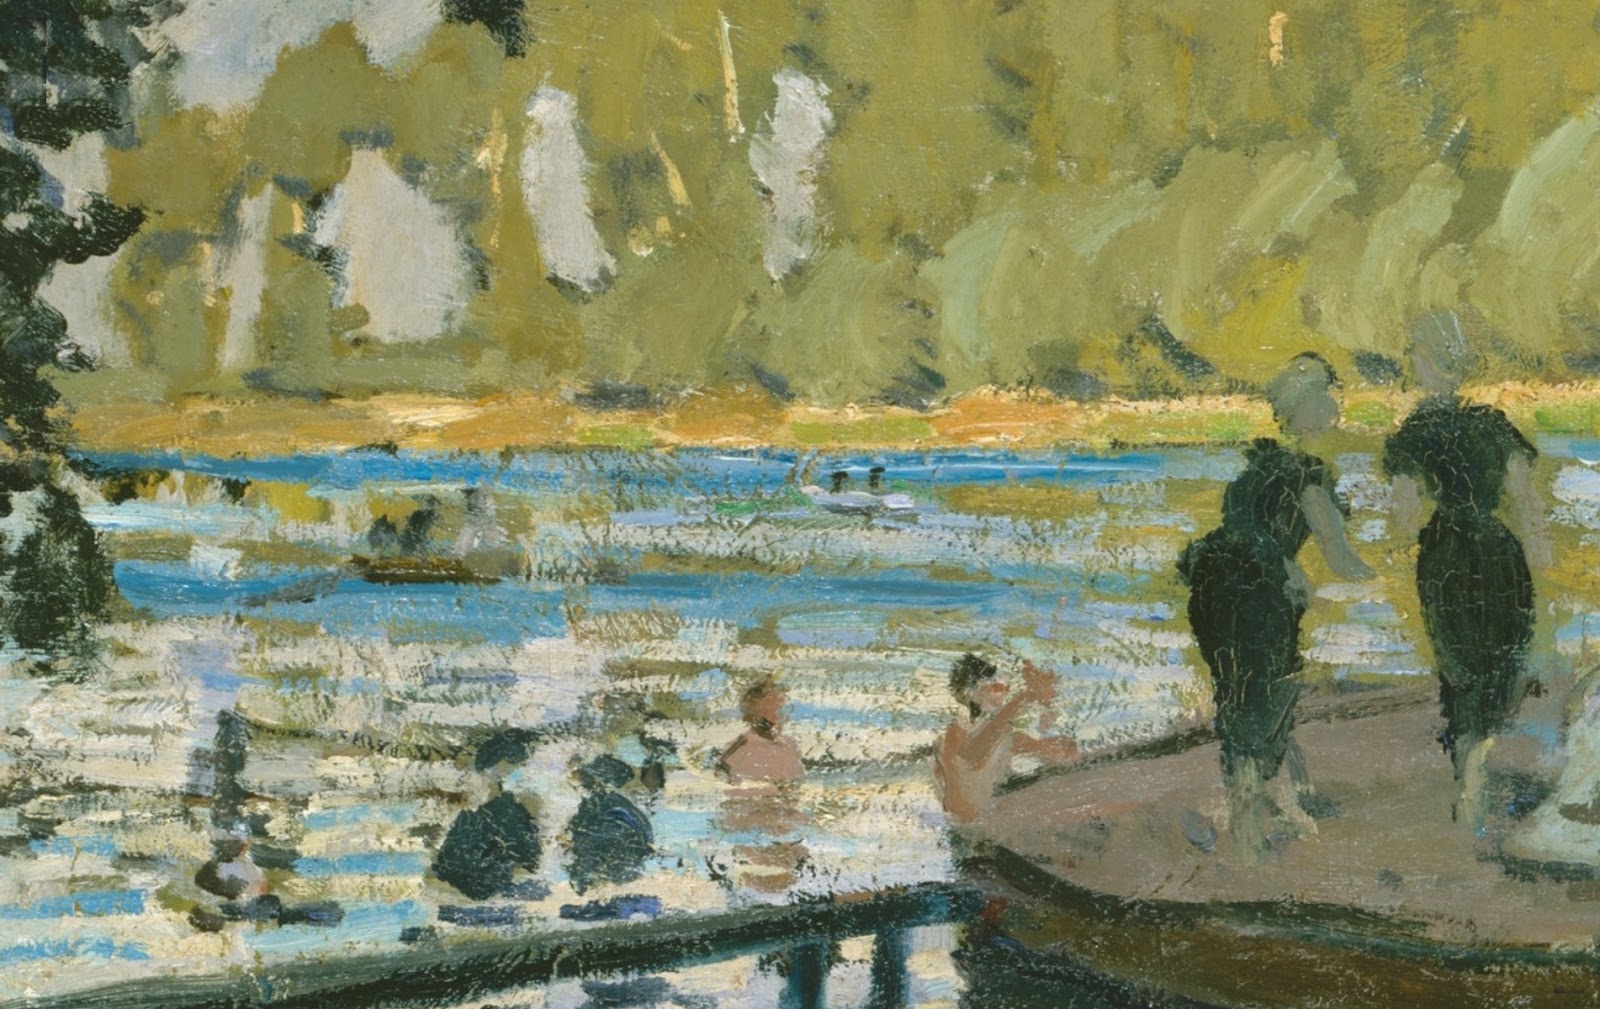 Claude+Monet-1840-1926 (1066).jpg